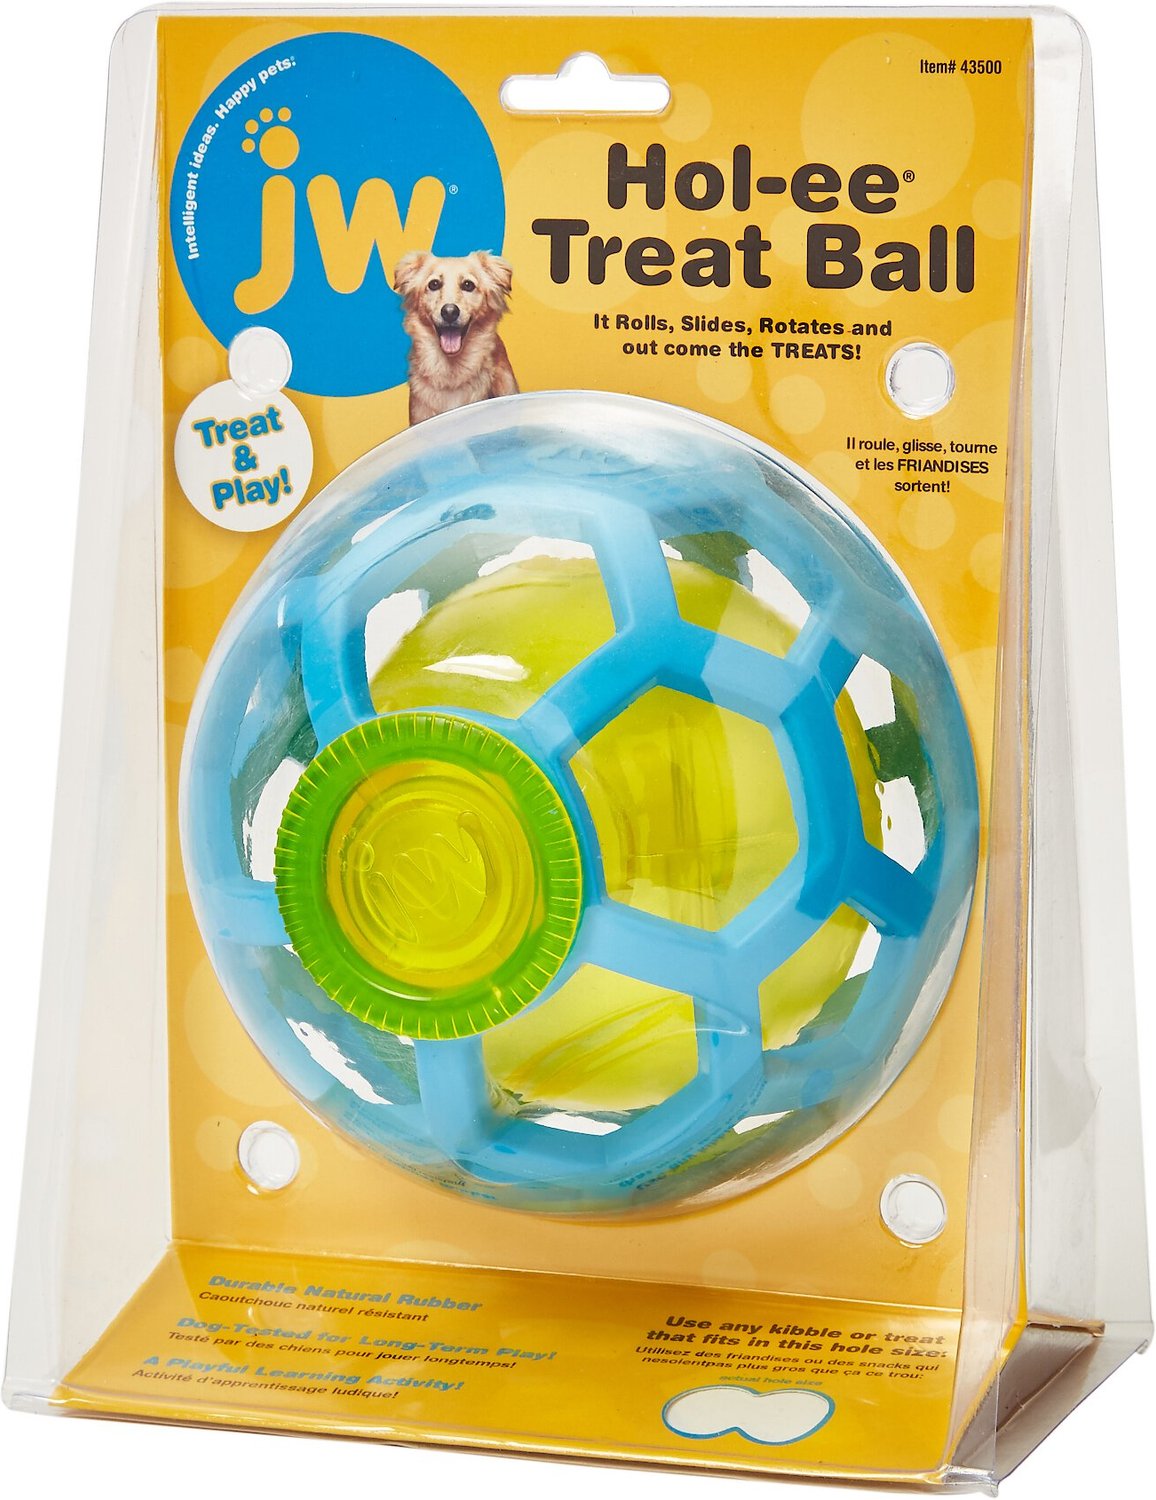 jw treat ball